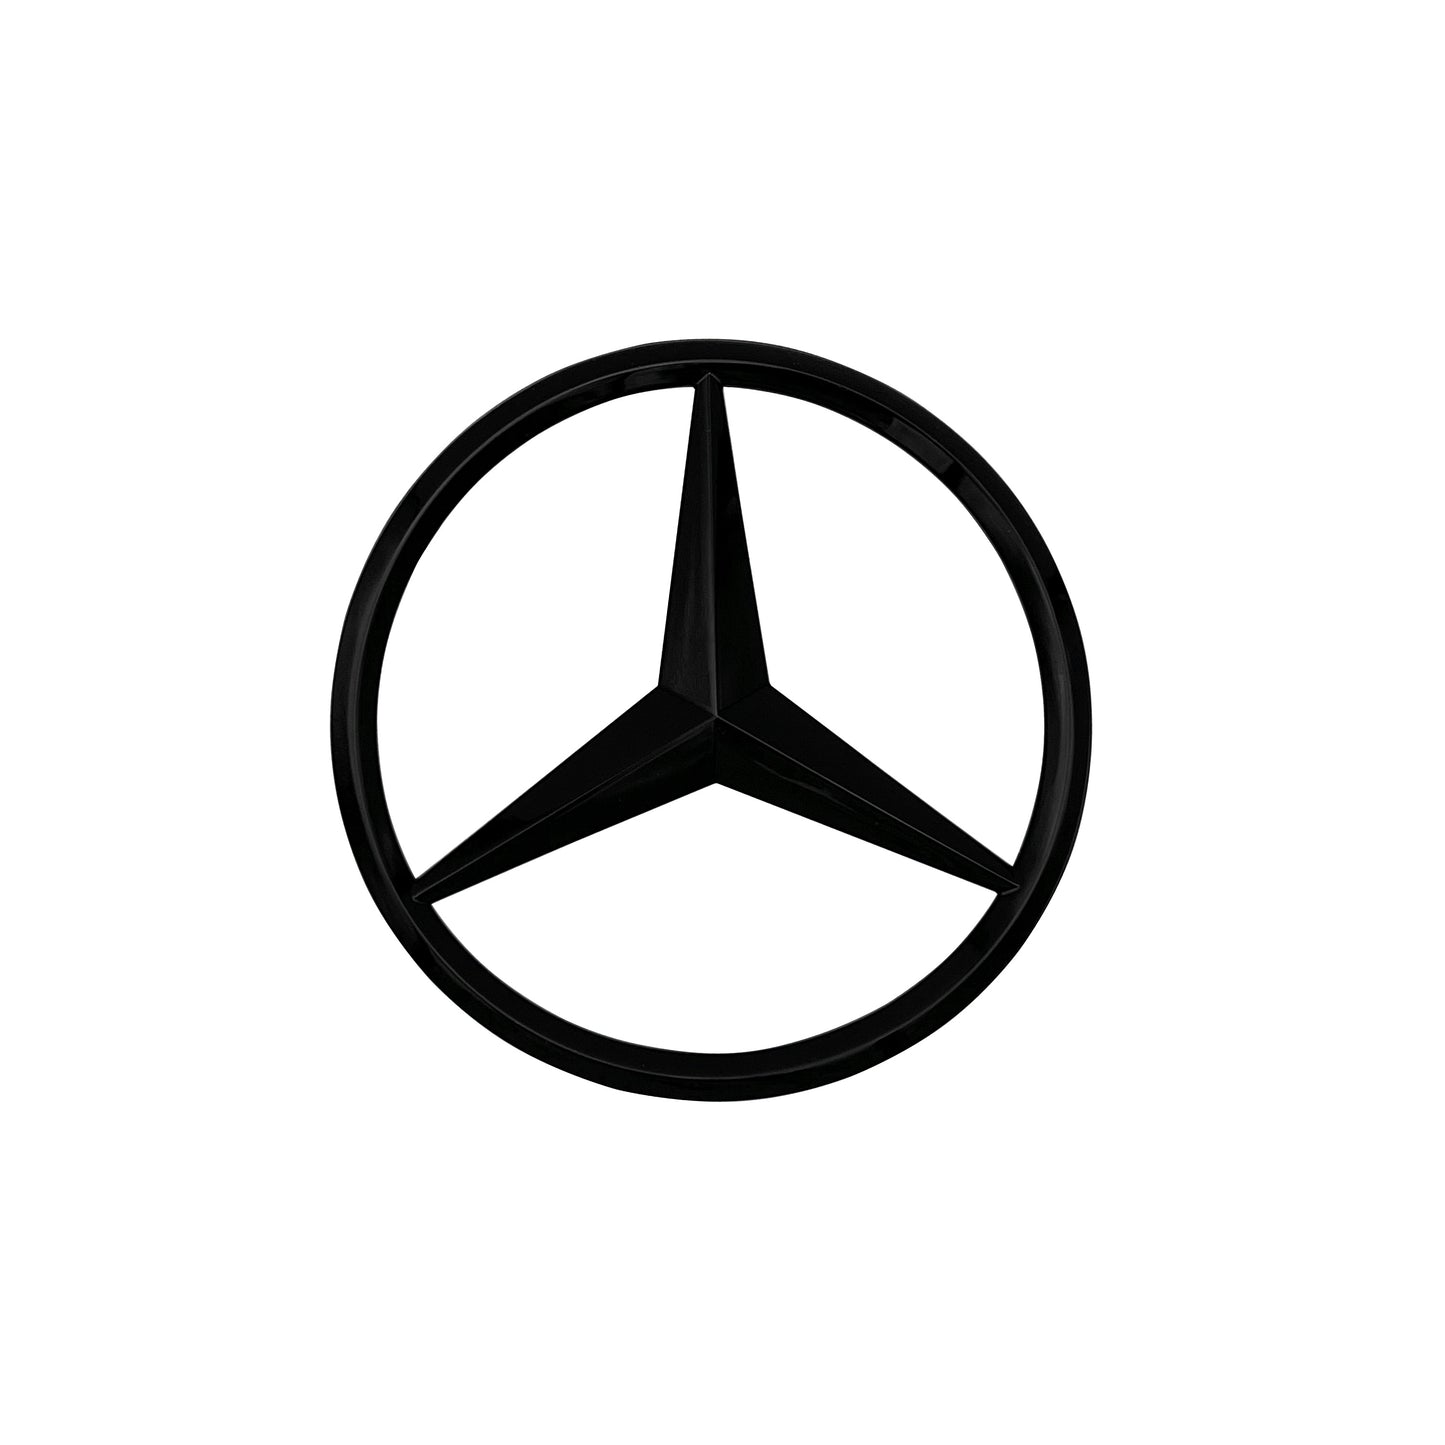 Mercedes Benz W204 C300 AMG Emblem 4MATIC Gloss Black Rear Trunk Star Badge Set